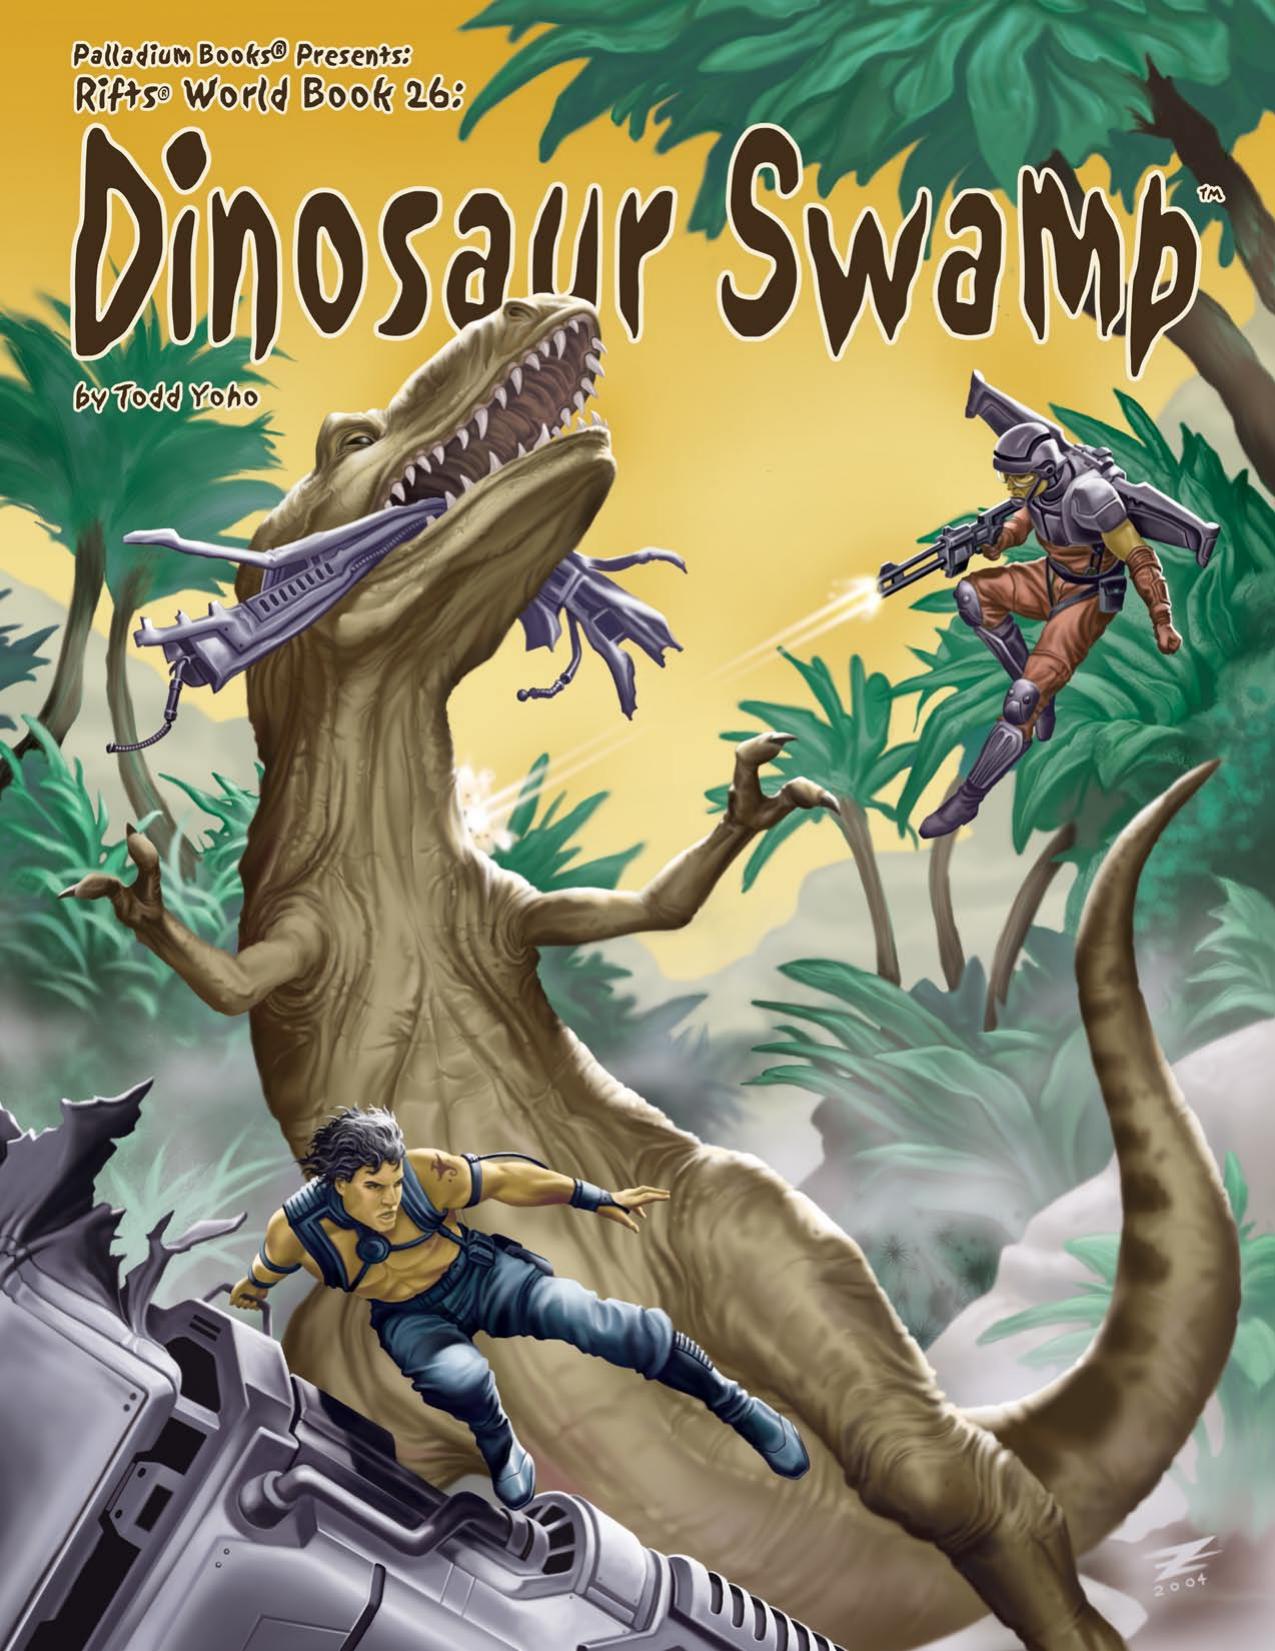 Rifts - World Book 26 - Dinosaur Swamp by PAL862P